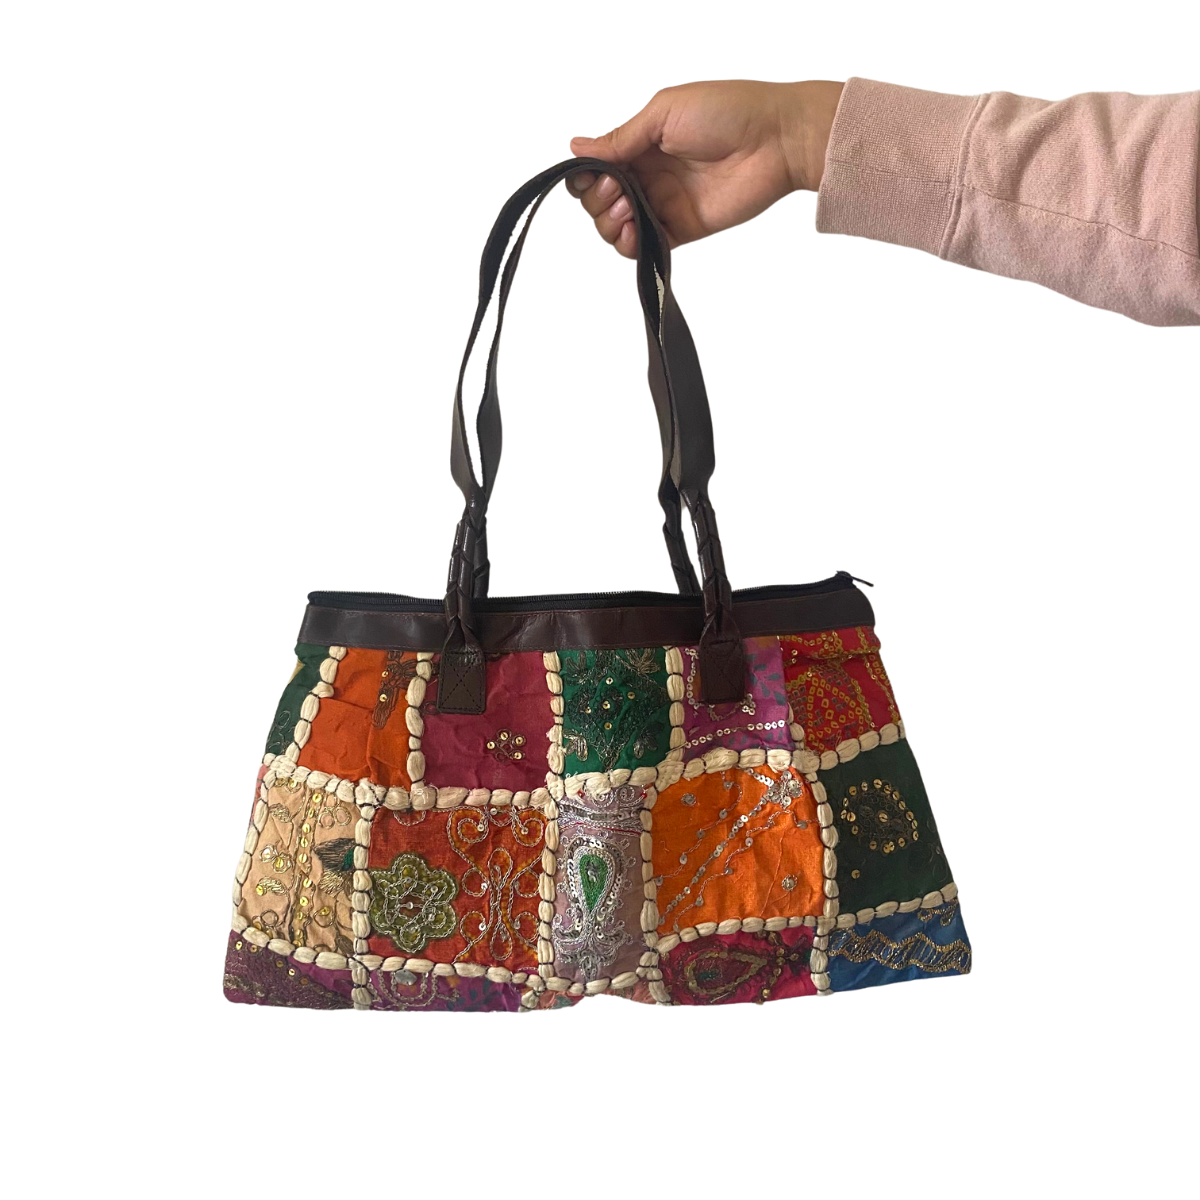 Bags and Purses, Handmade Fabric Bags, Novelty Handbag, Shoulder Bag,  Tapestry Tote Bag ,hobo Bag, Brown Bag, Gift for Her, Ready to Ship - Etsy